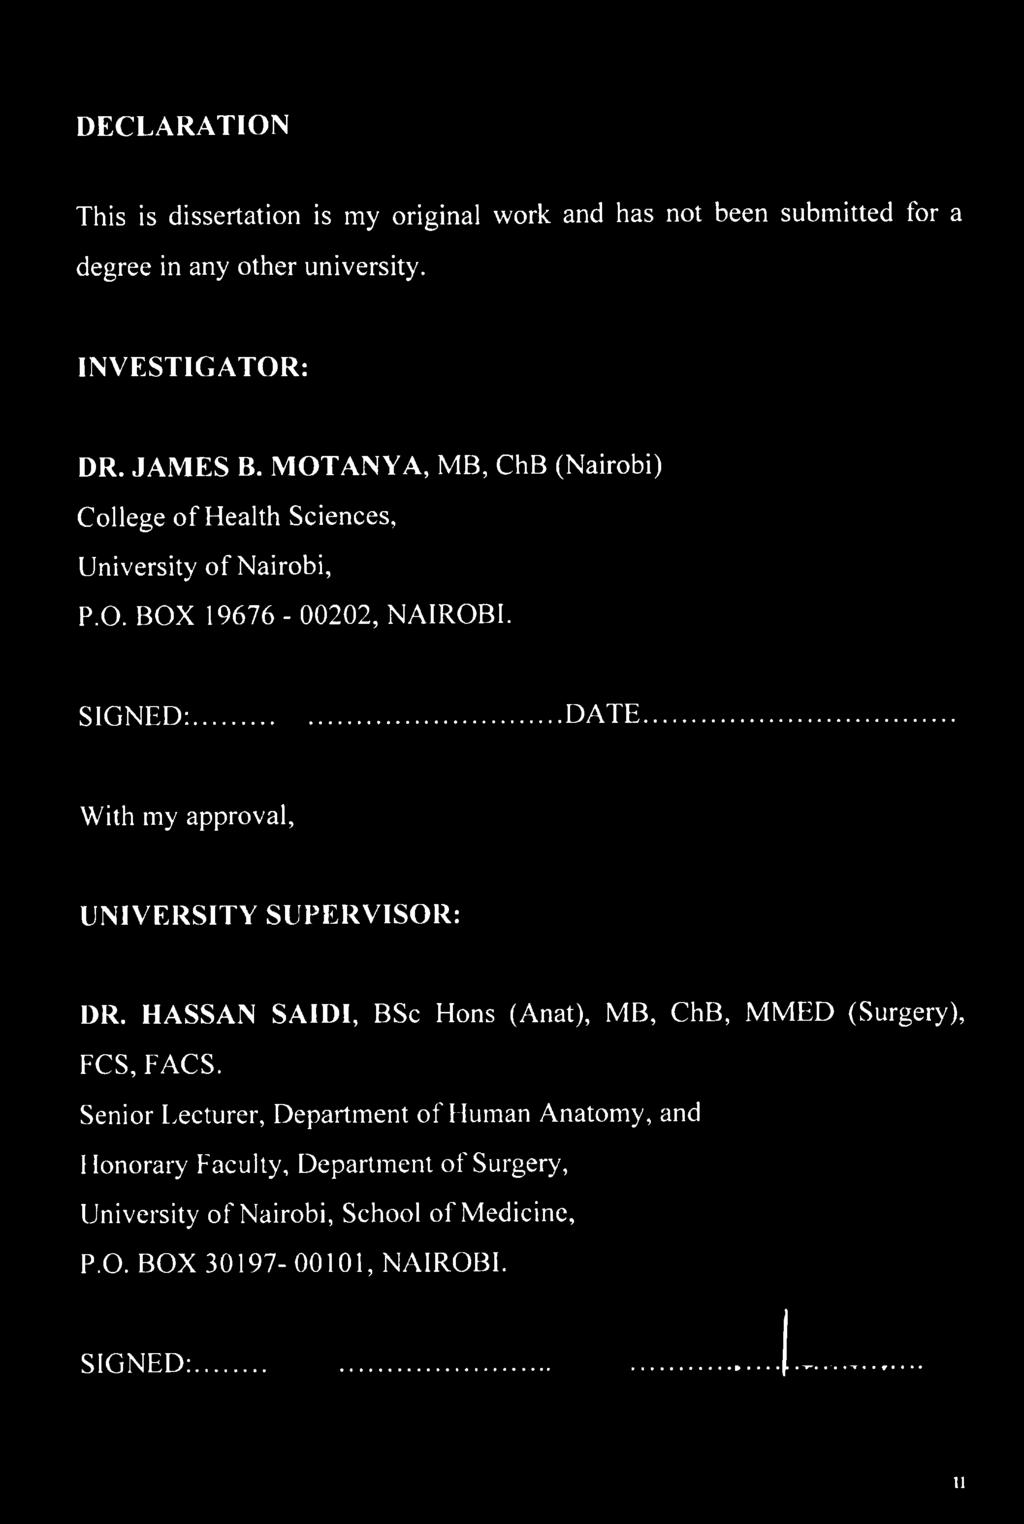 MOTANYA, MB, ChB (Nairobi) College of Health Sciences, University of Nairobi, P.O. BOX 19676-00202, NAIROBI.